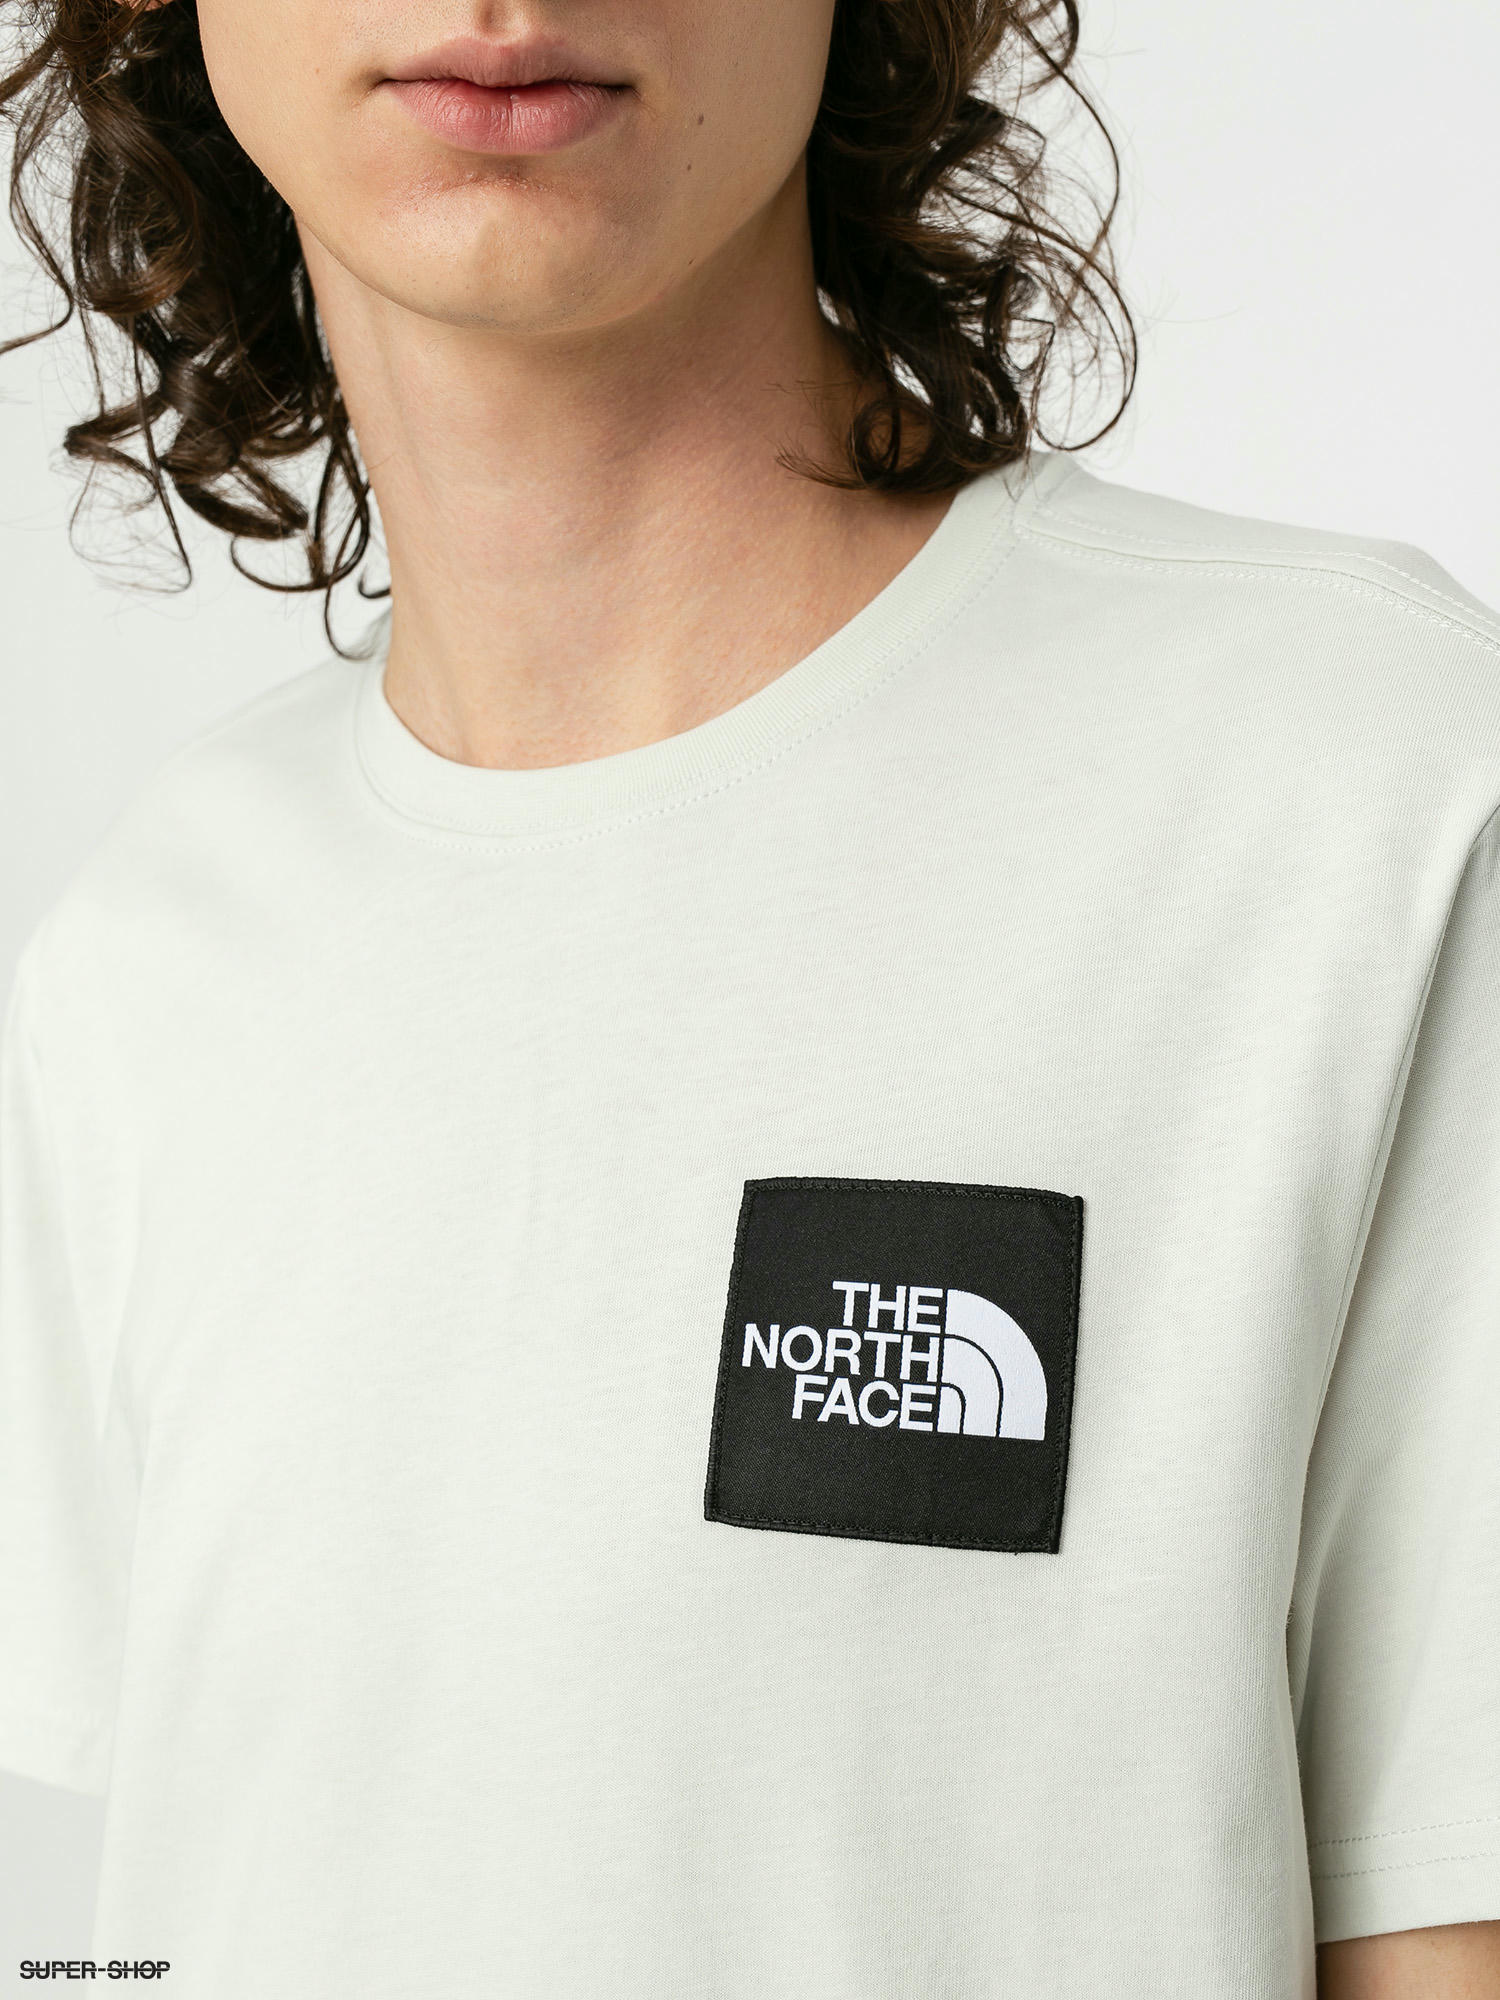 the north face logo t shirt